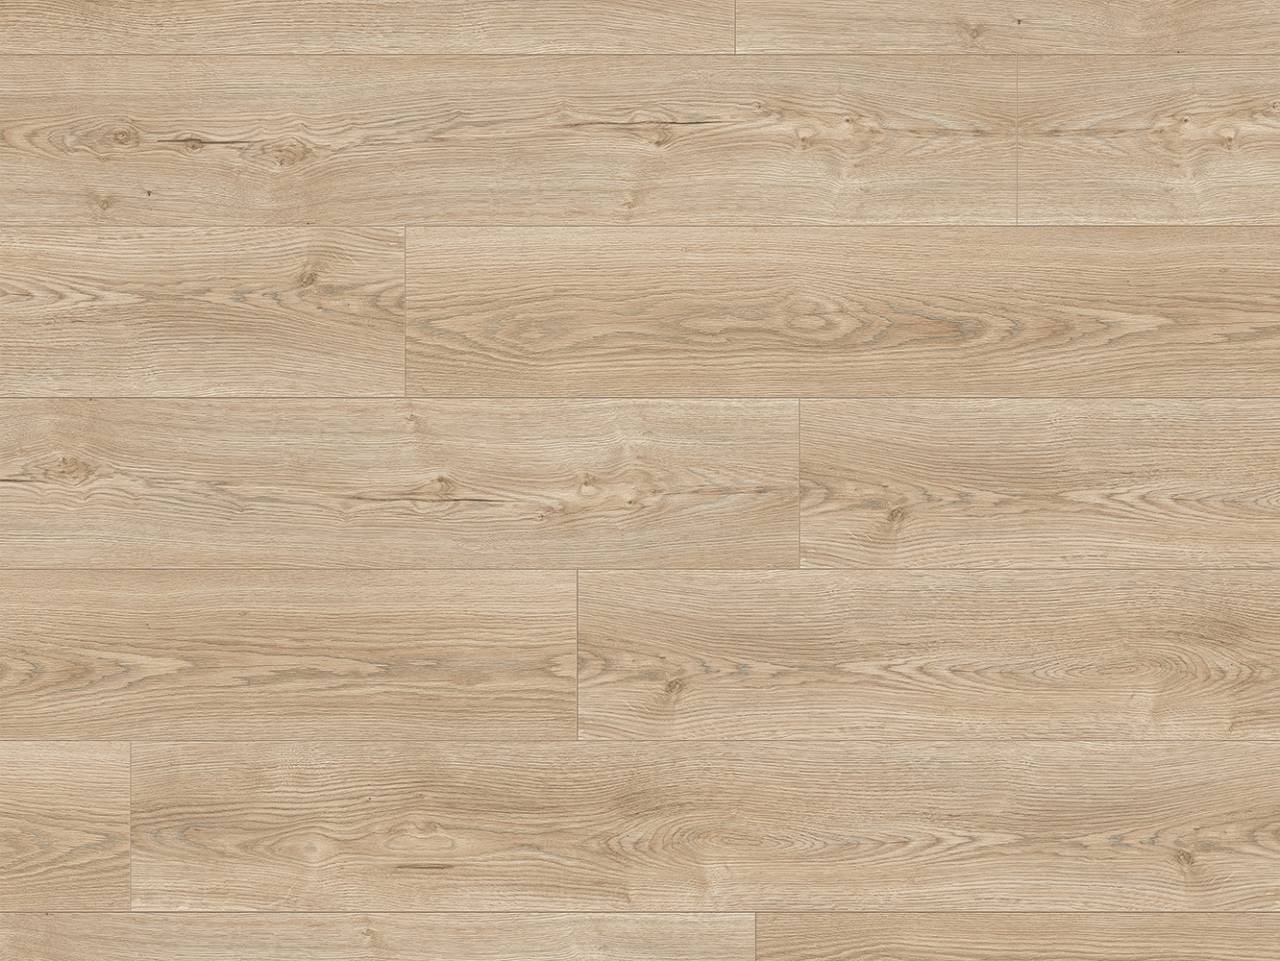 Close-up of 'K485 Natural Sterling Oak' flooring showcasing detailed grain patterns and natural oak hues.